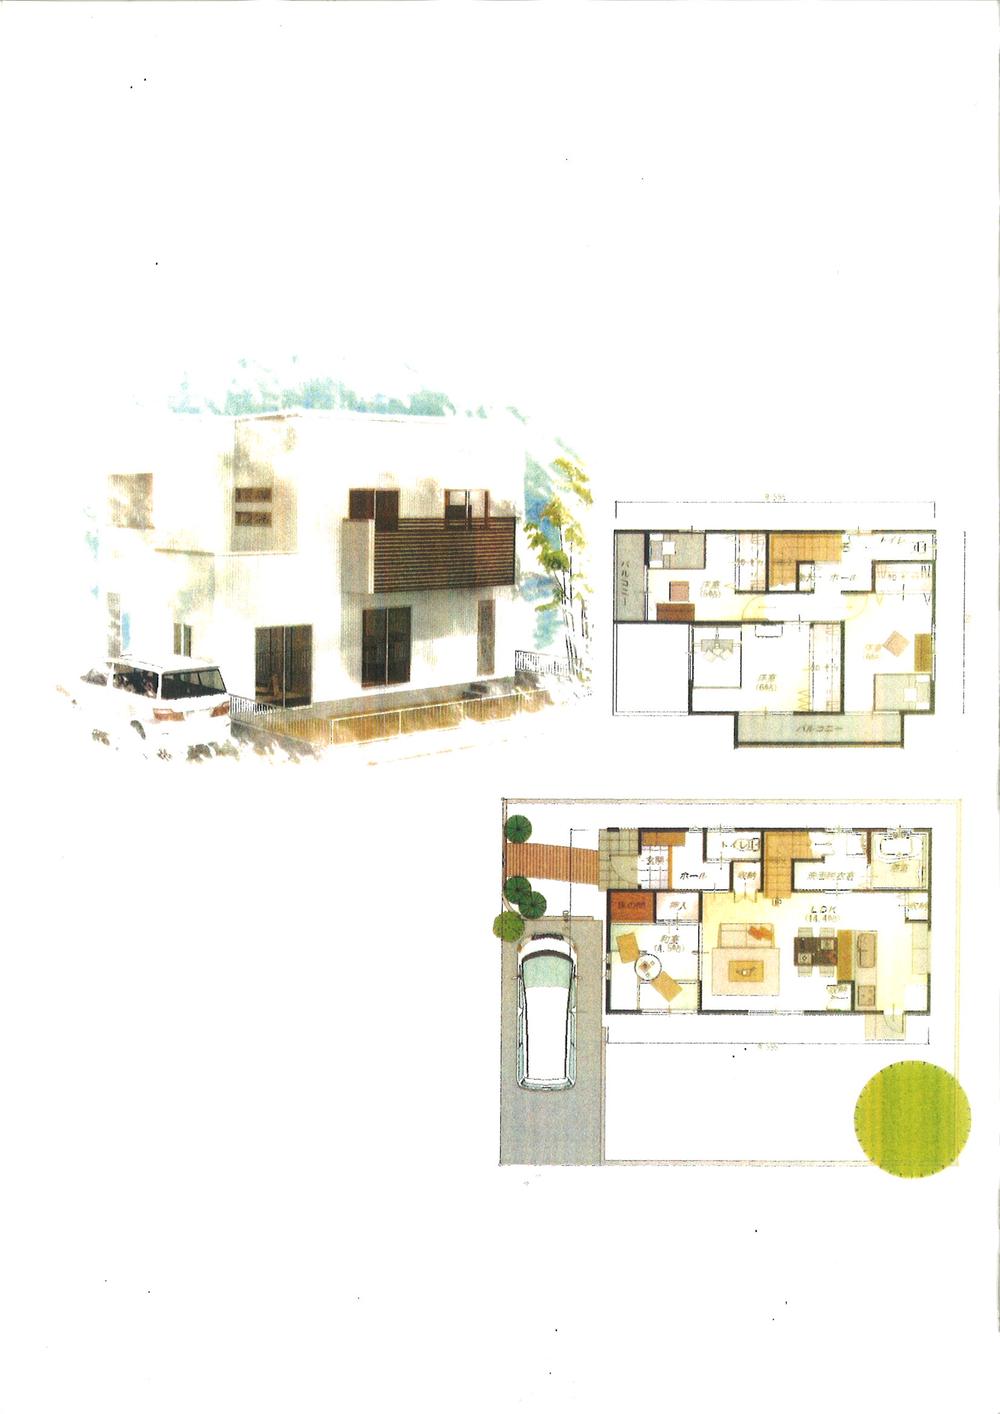 Building plan example (floor plan). Building area 100.19 sq m